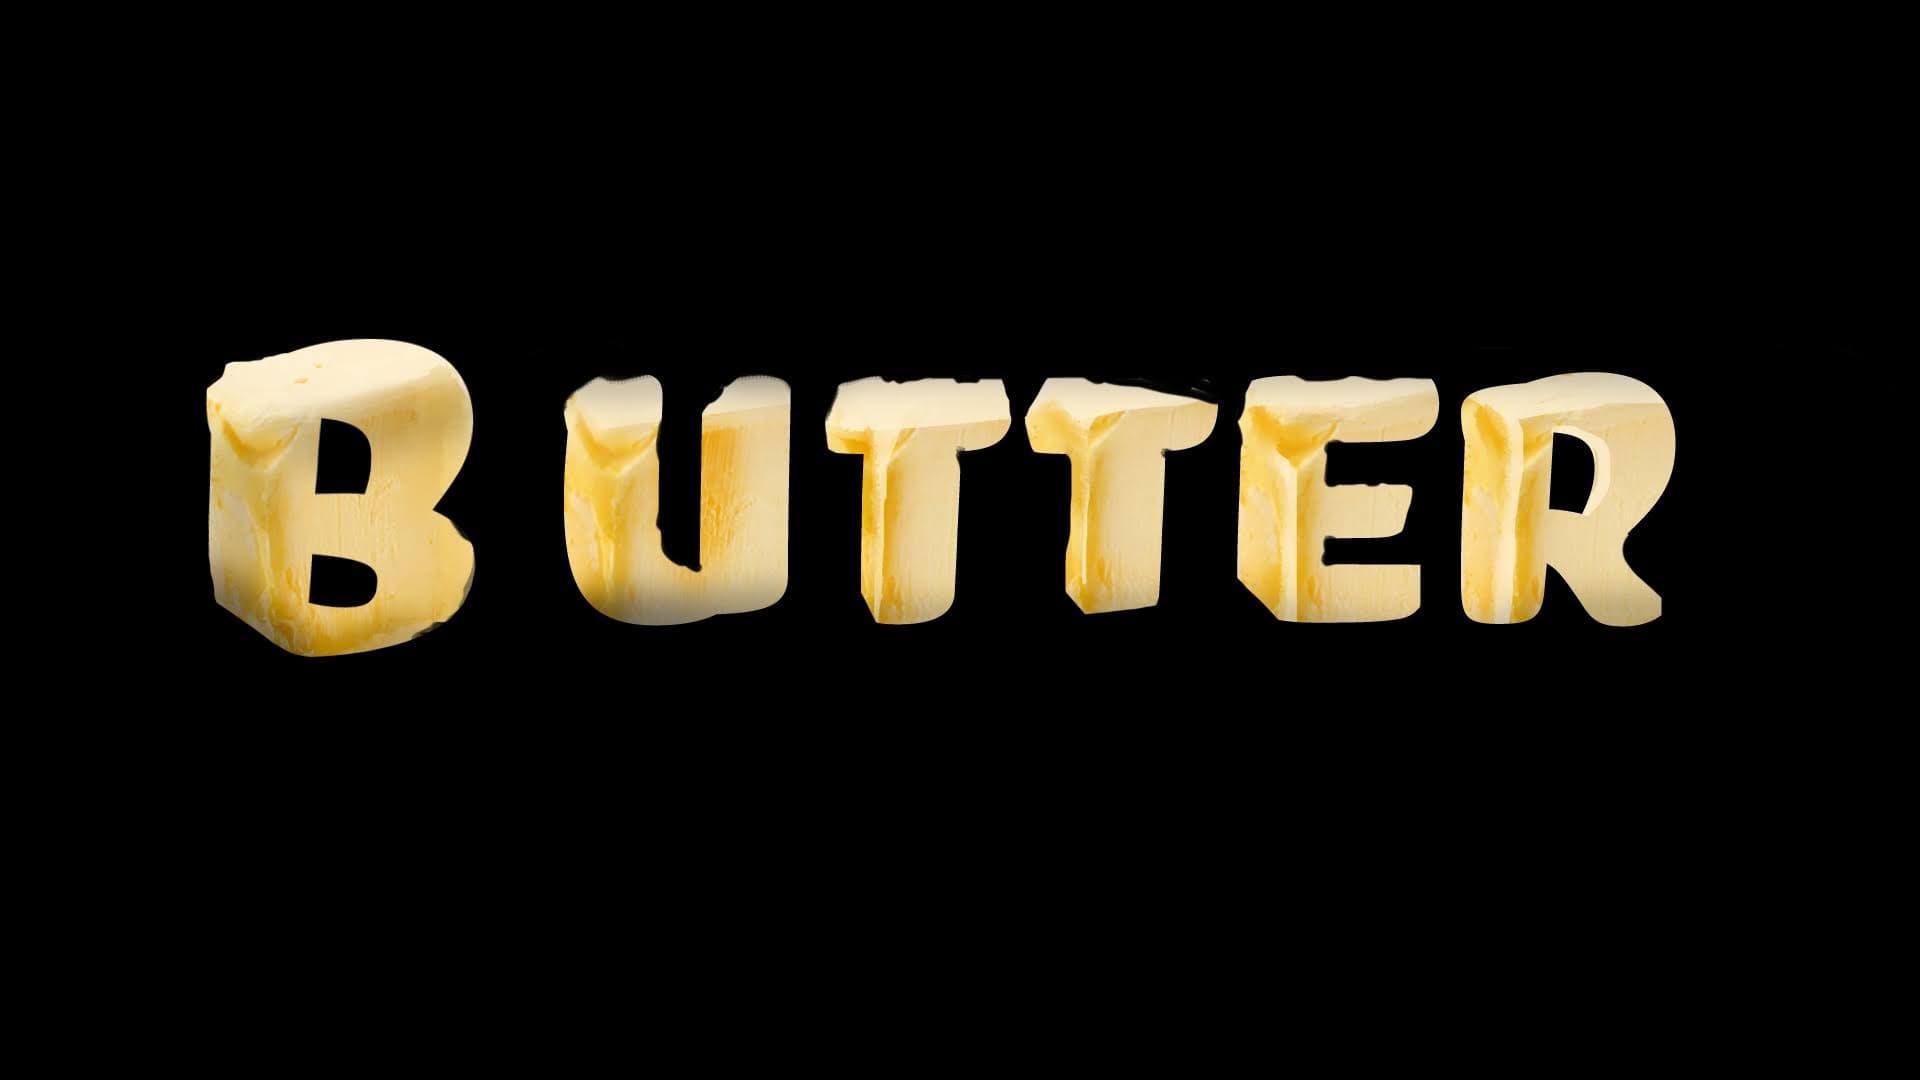 Butter backdrop